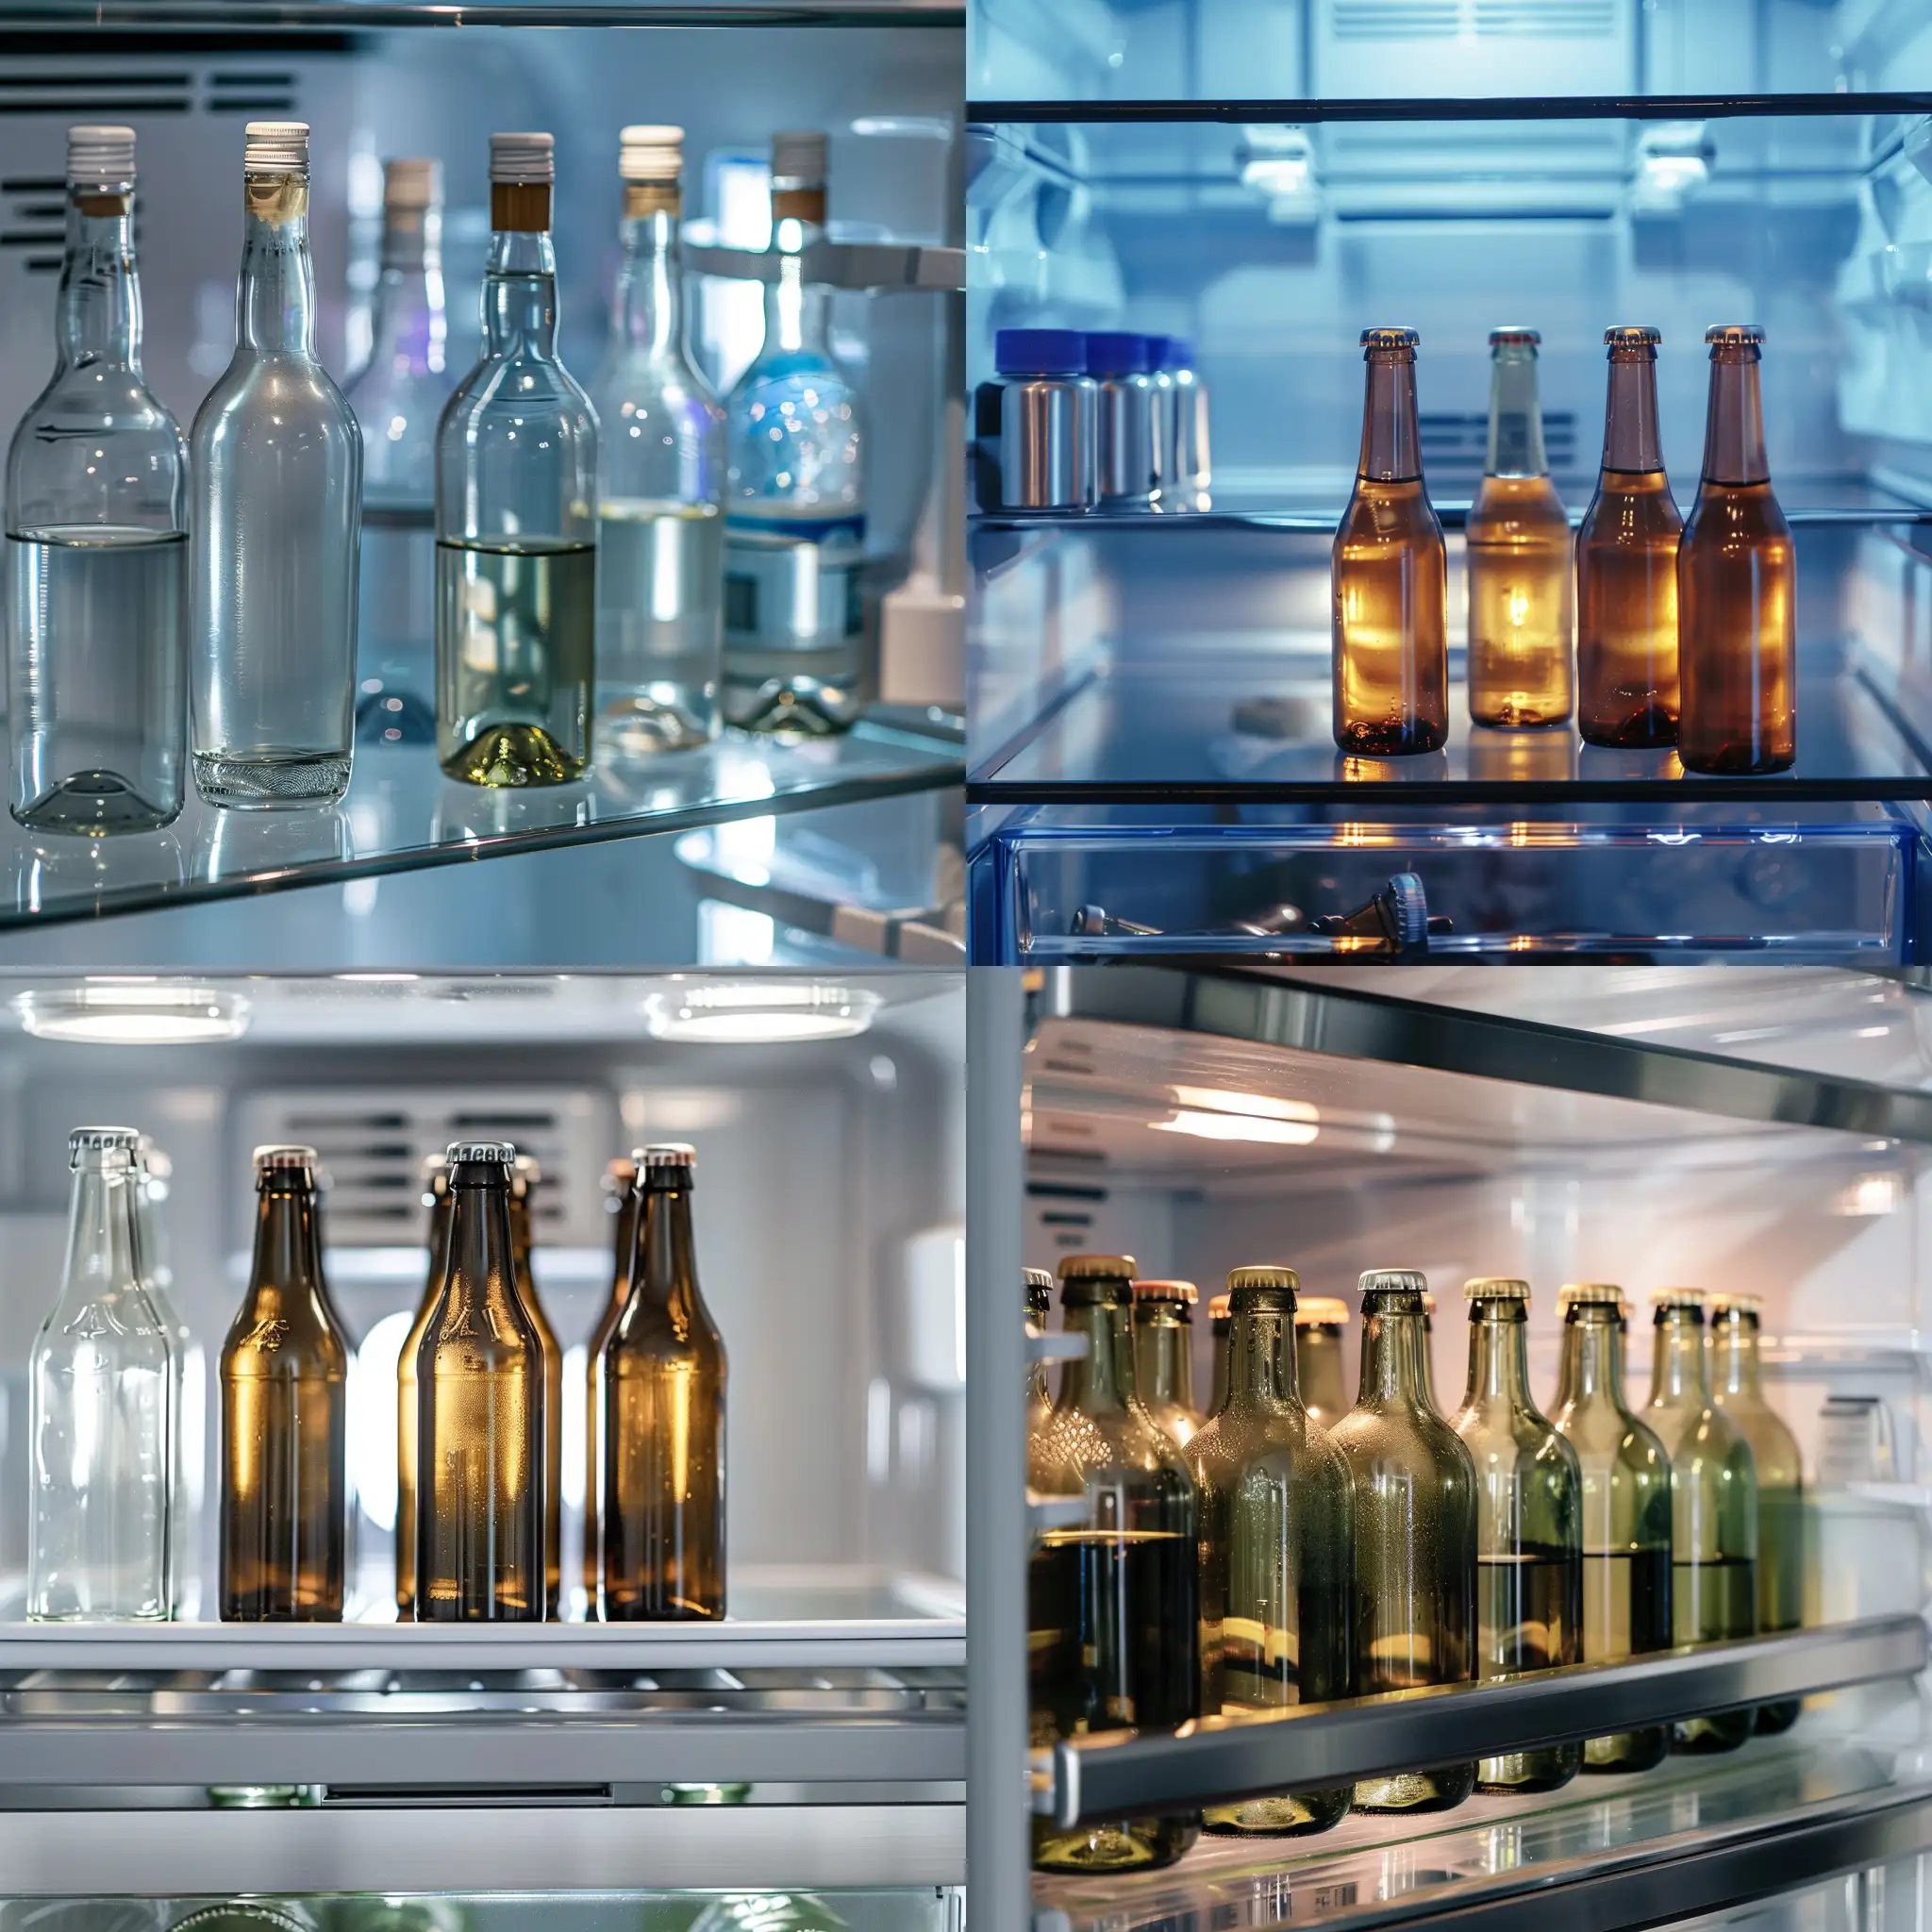 empty bottles in the refrigerator
